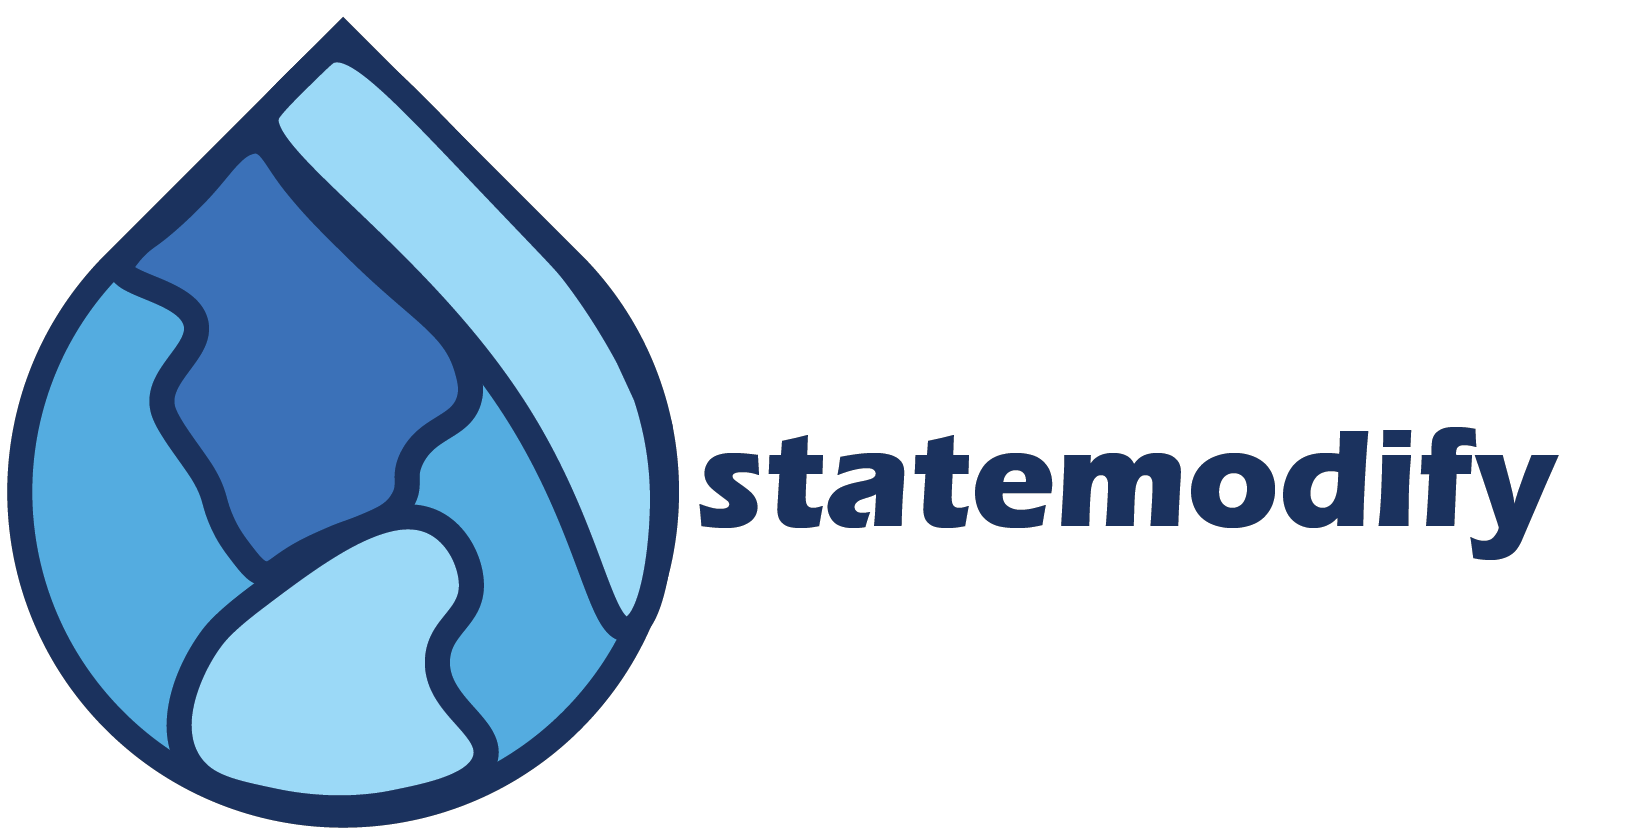 statemodify documentation - Home